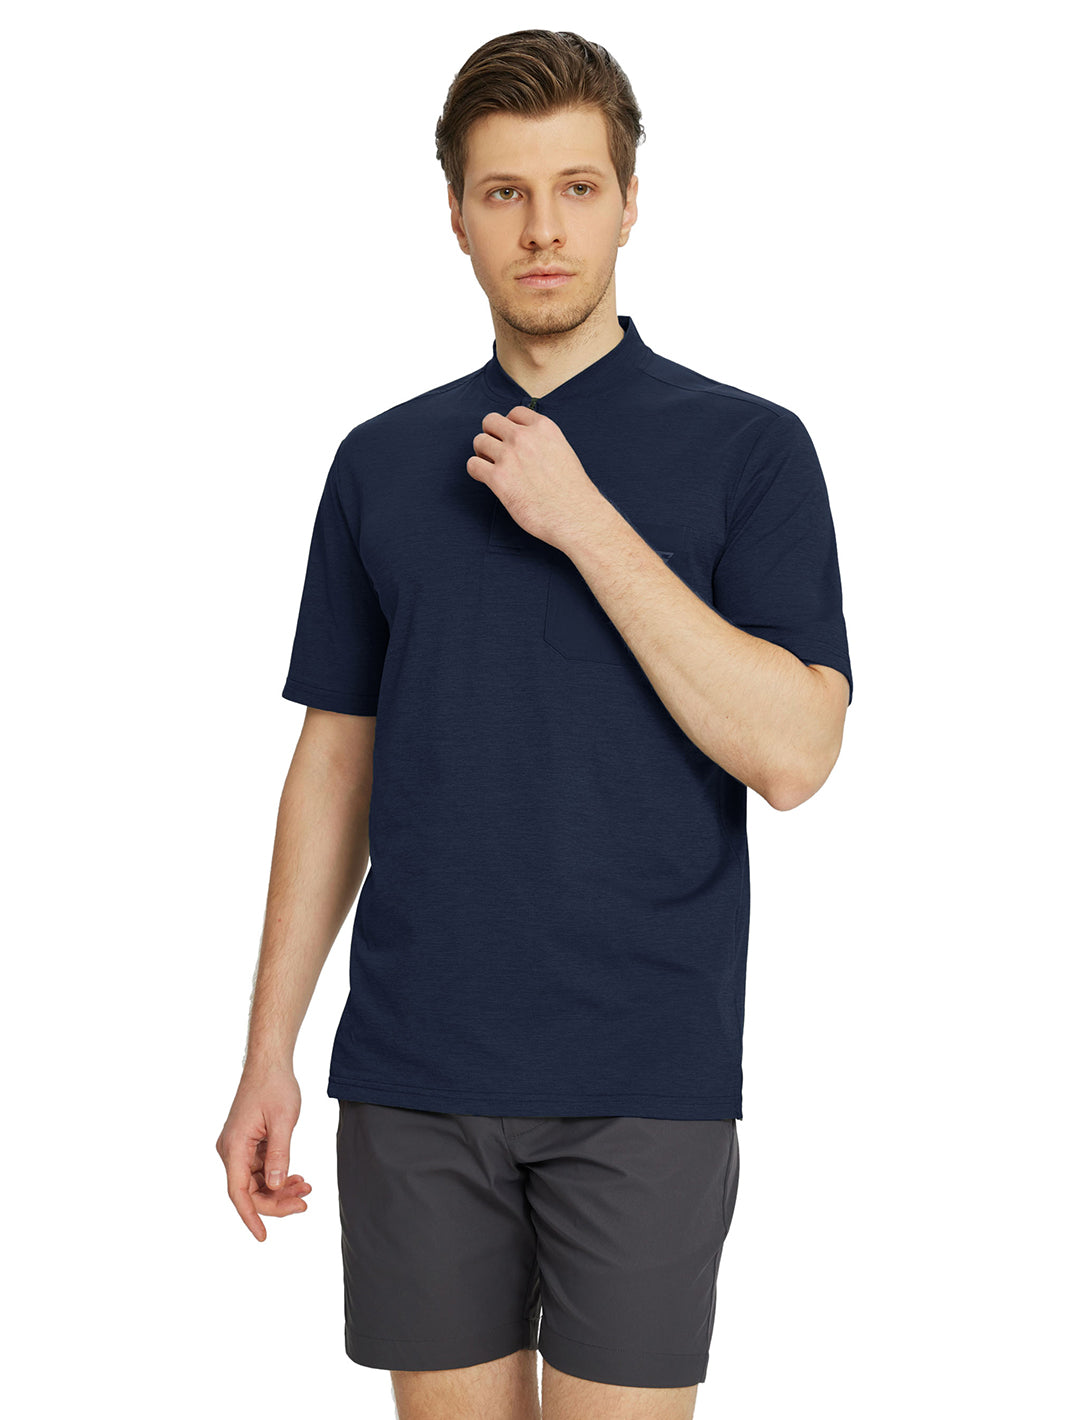 Men's Collarless Pocket Henley Golf Shirts-Navy